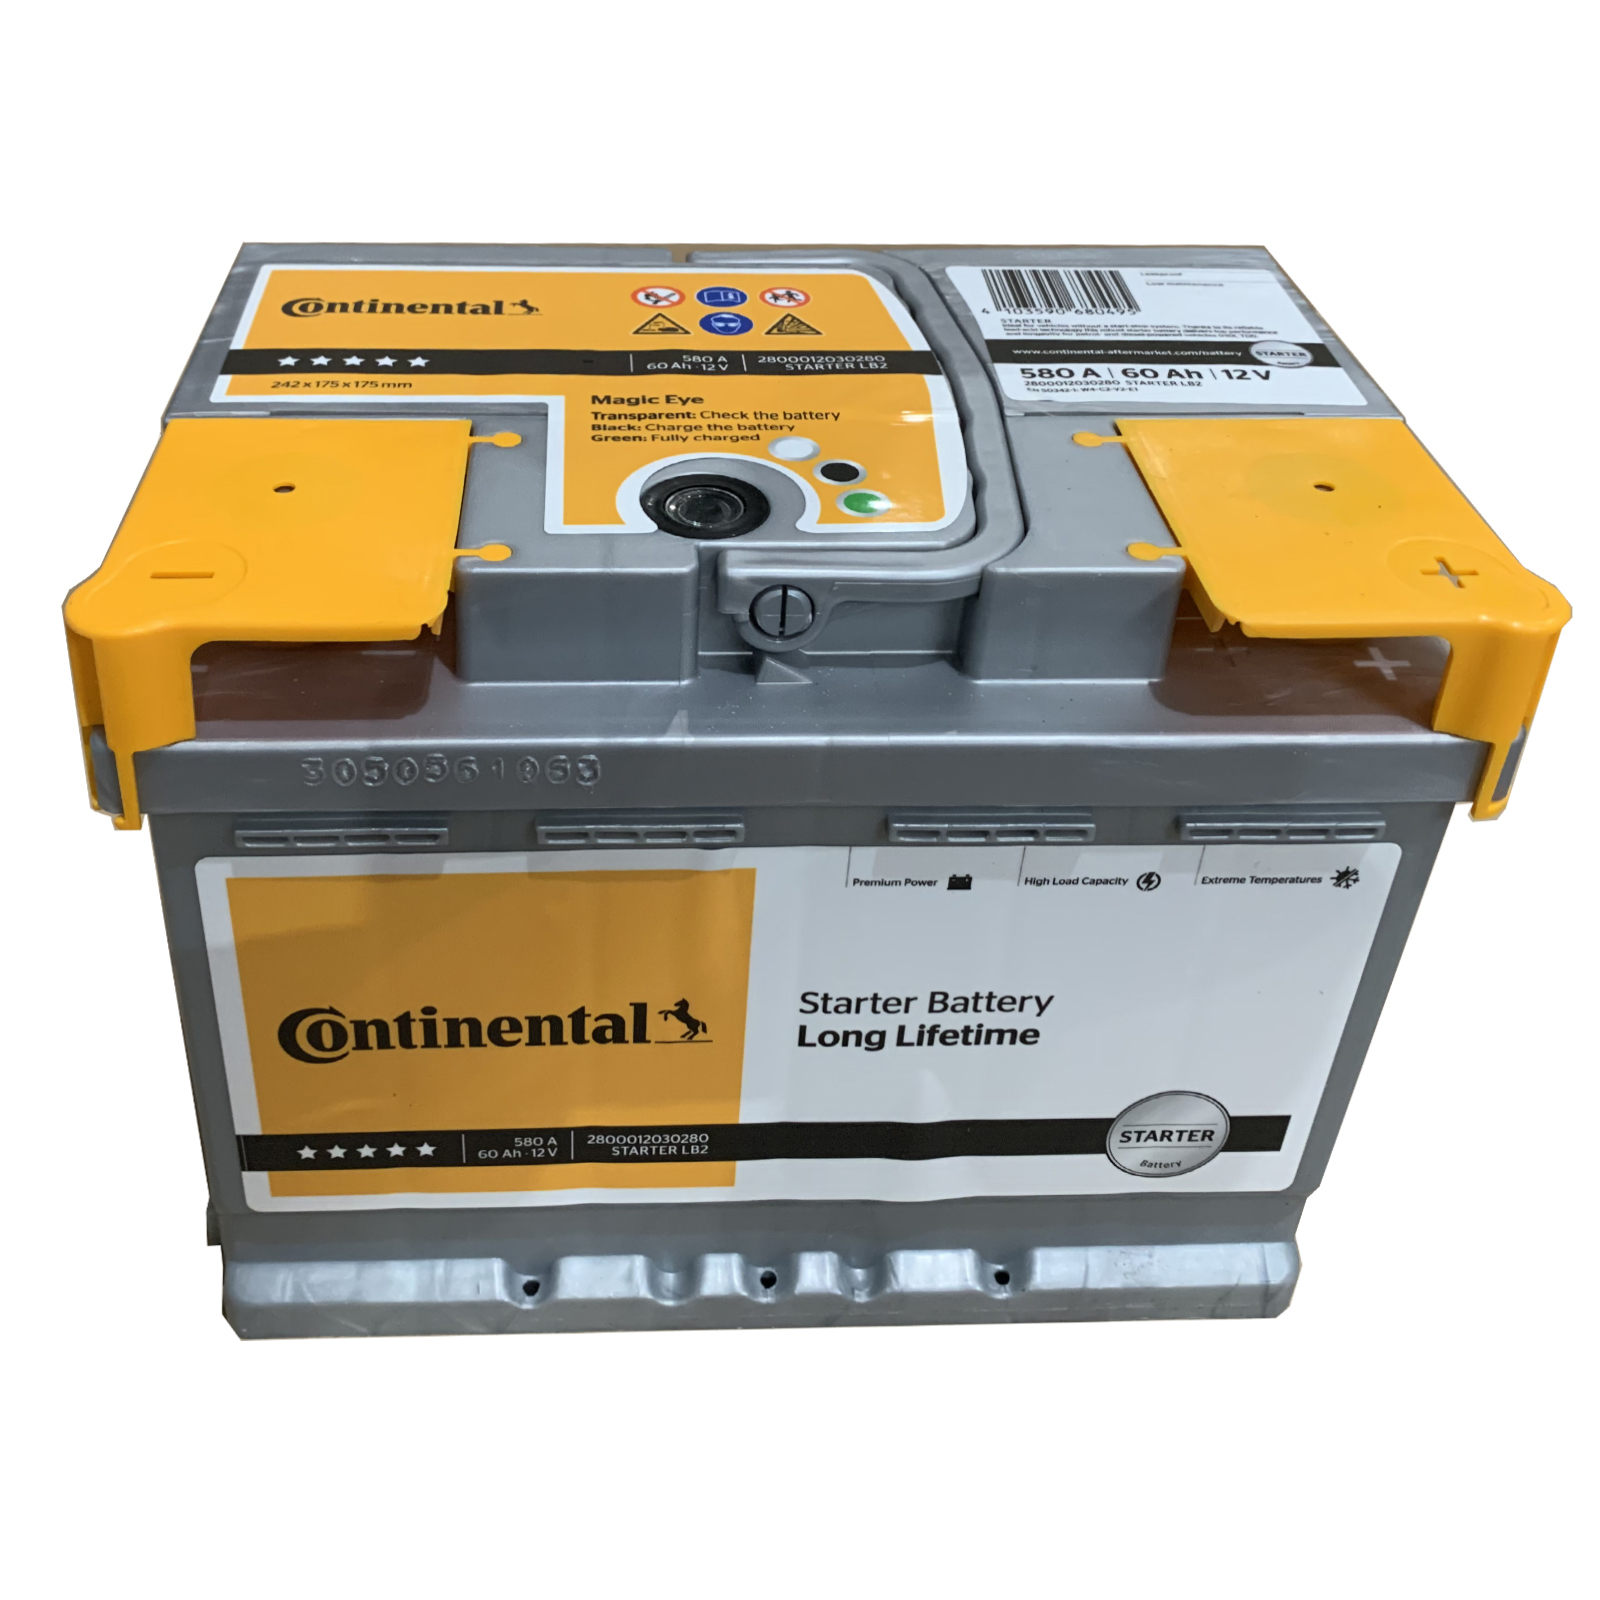 CONTINENTAL Starterbatterie, 2800012020280 2800012020280 CONTINENTAL